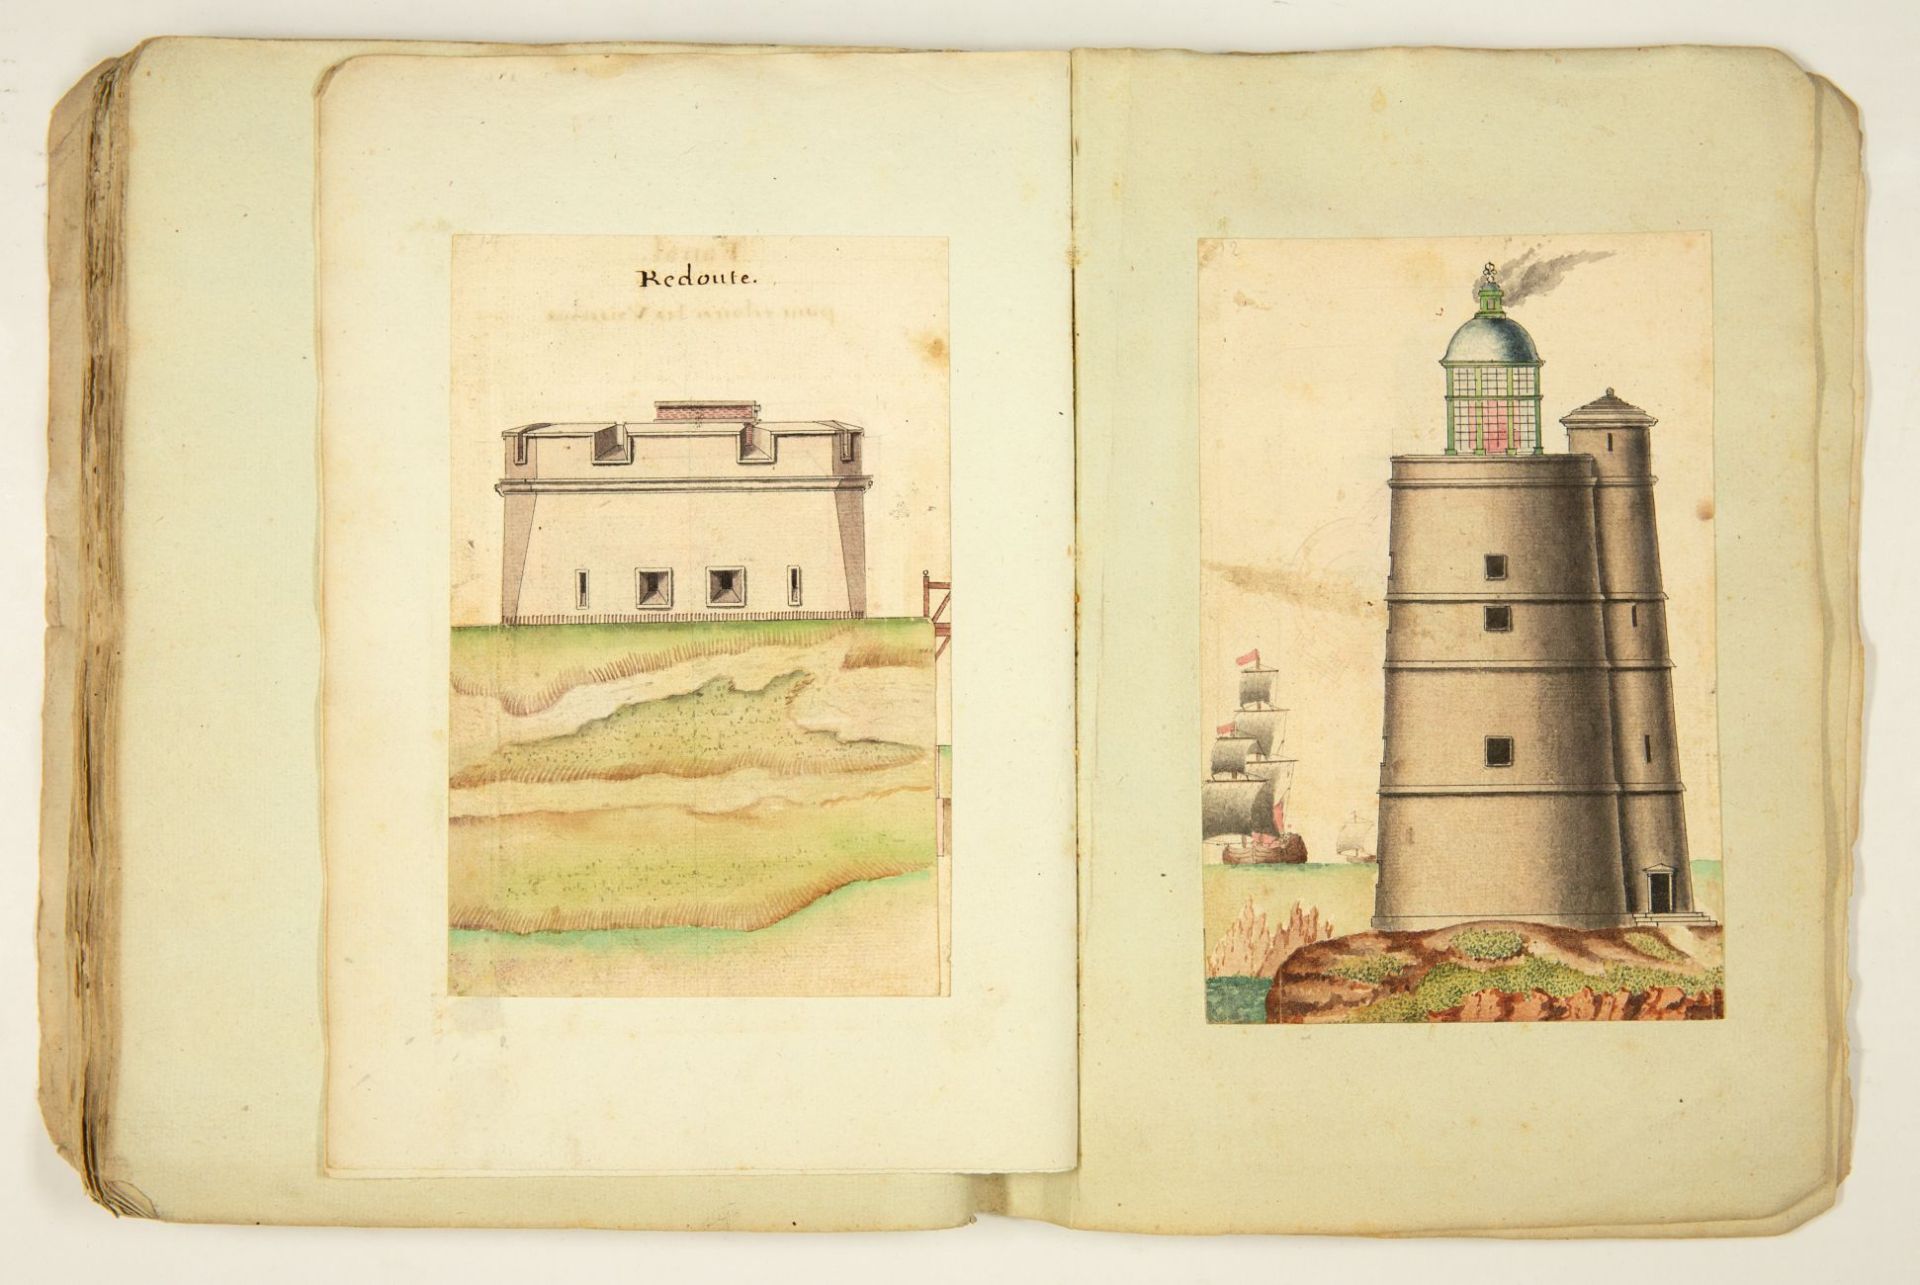 Principes de la fortification de campagne. Französische Handschrift. 18. Jh. - Vorbesitz B. Valentin - Image 2 of 2